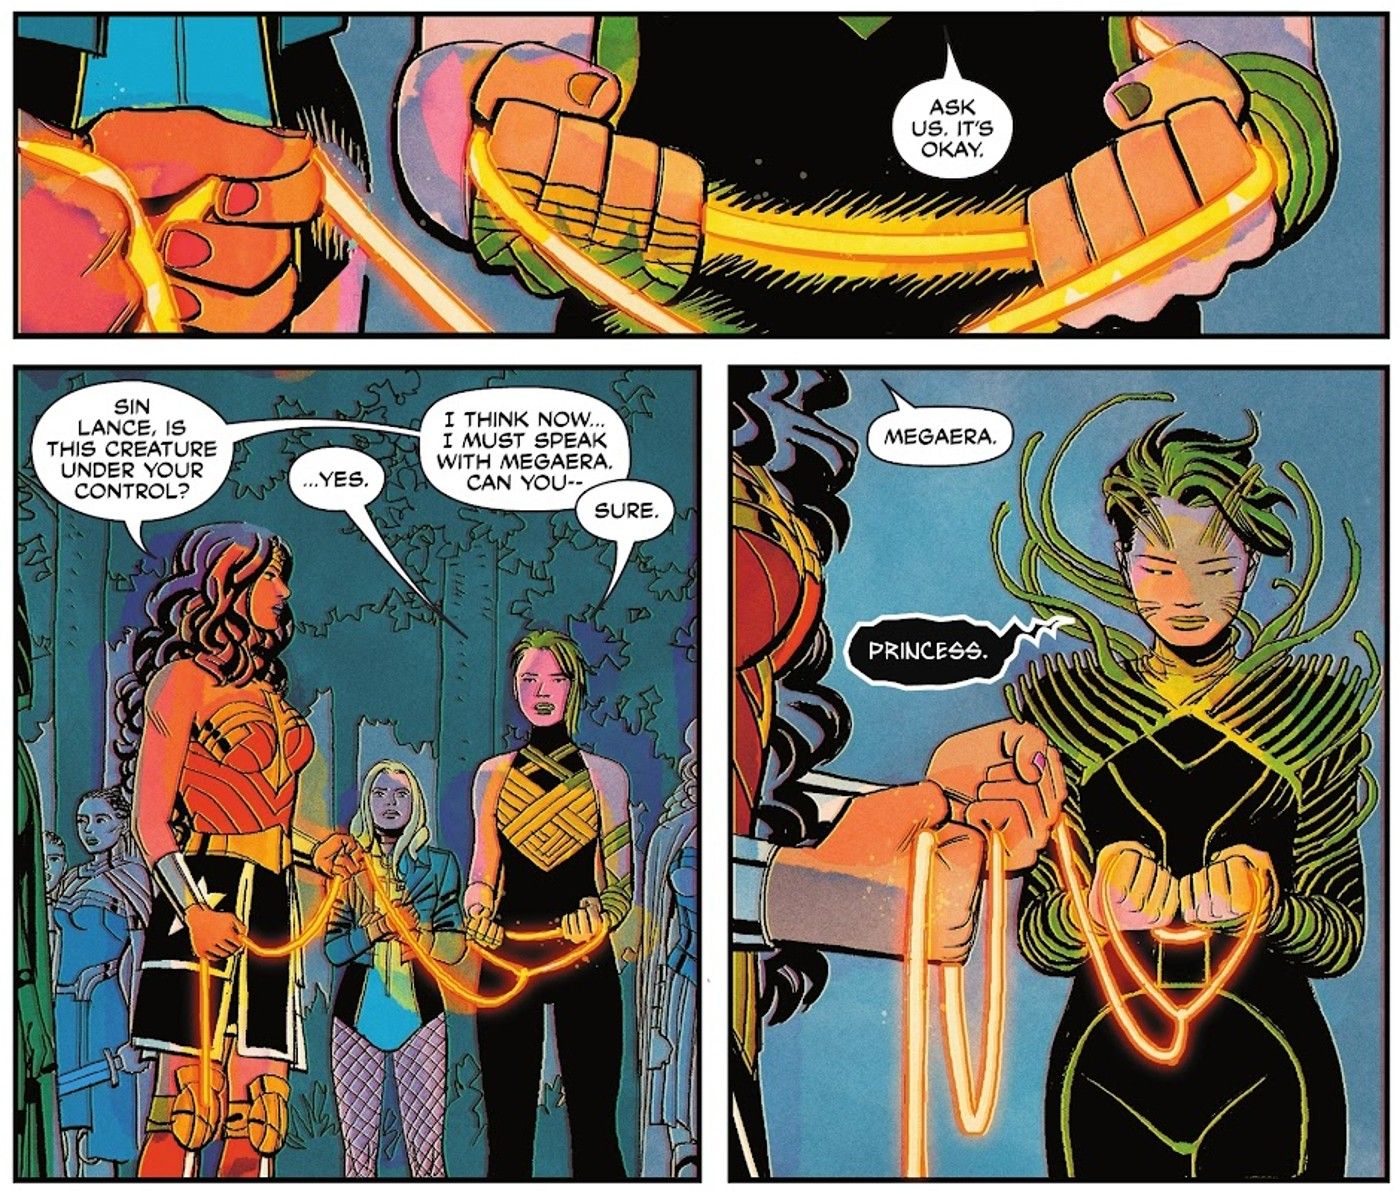 Comic book panels: Wonder Woman interrogates Megaera in Sin Lance's body.